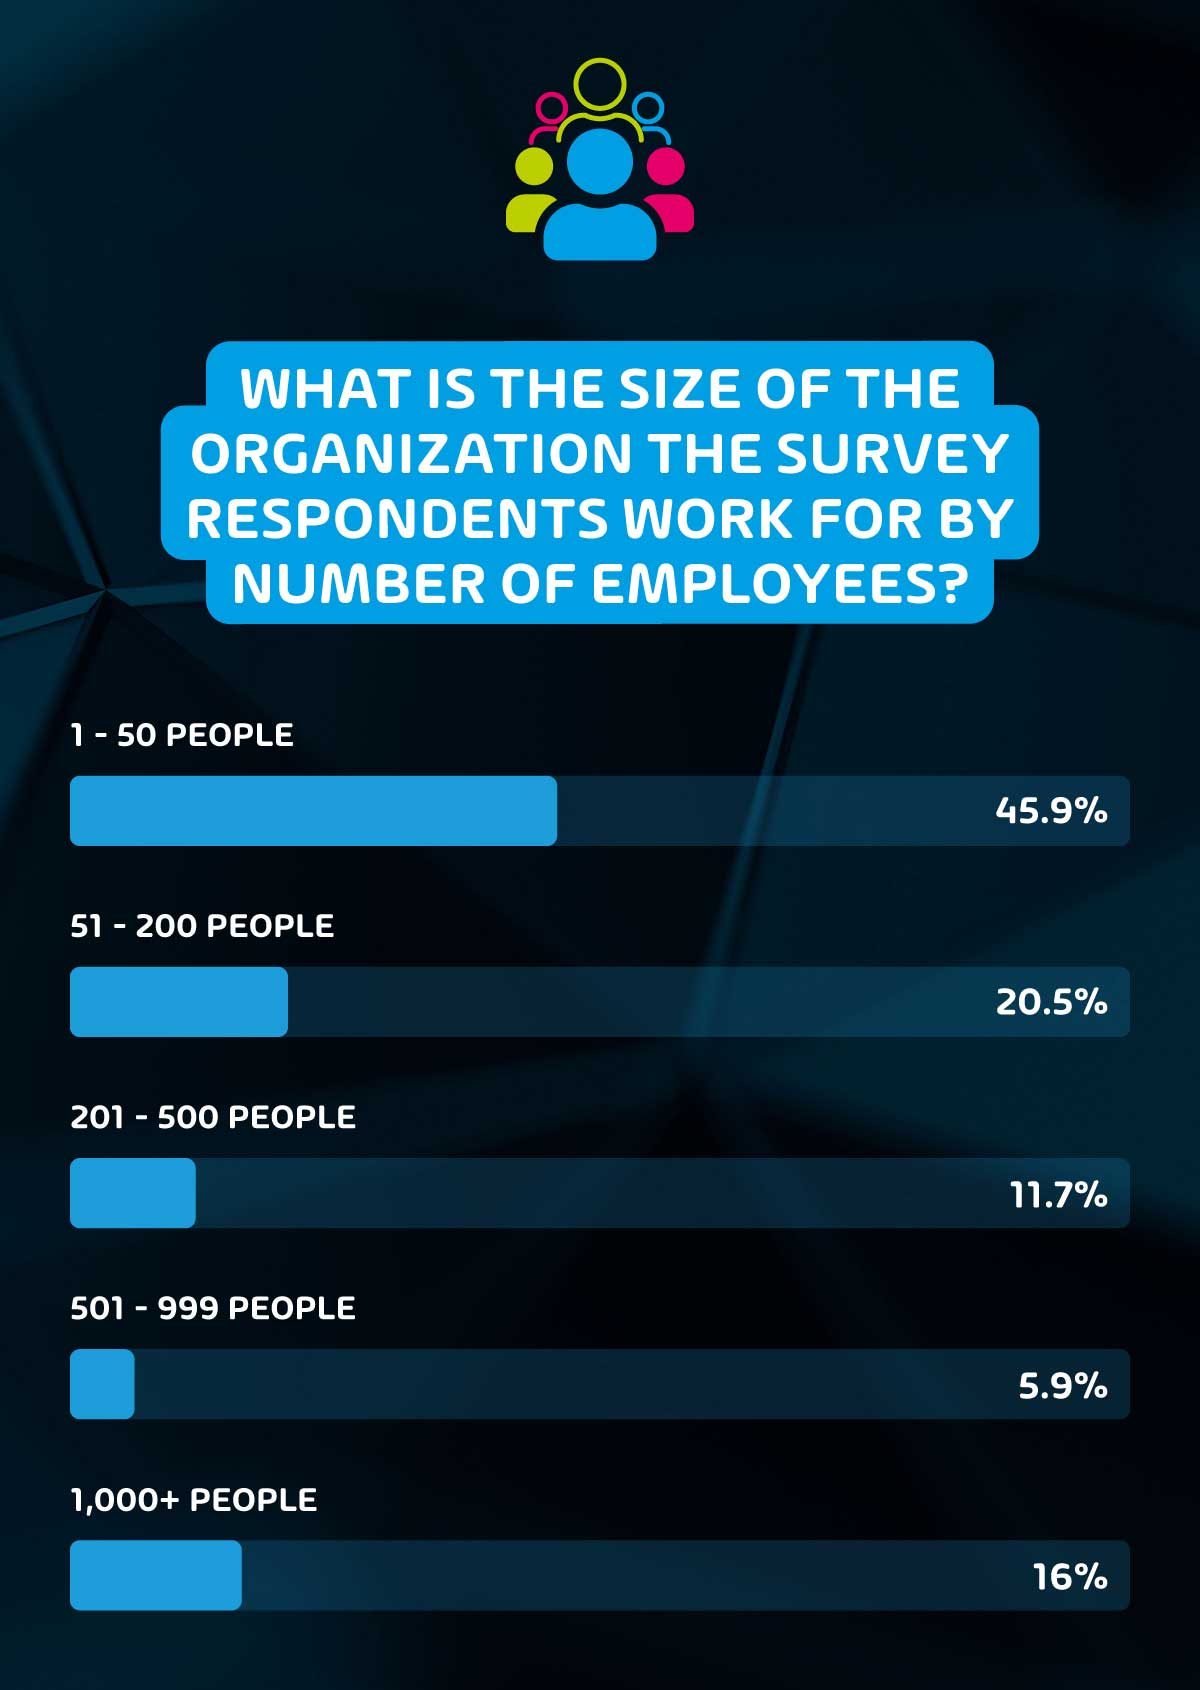 Organization Size of the Survey Respondents